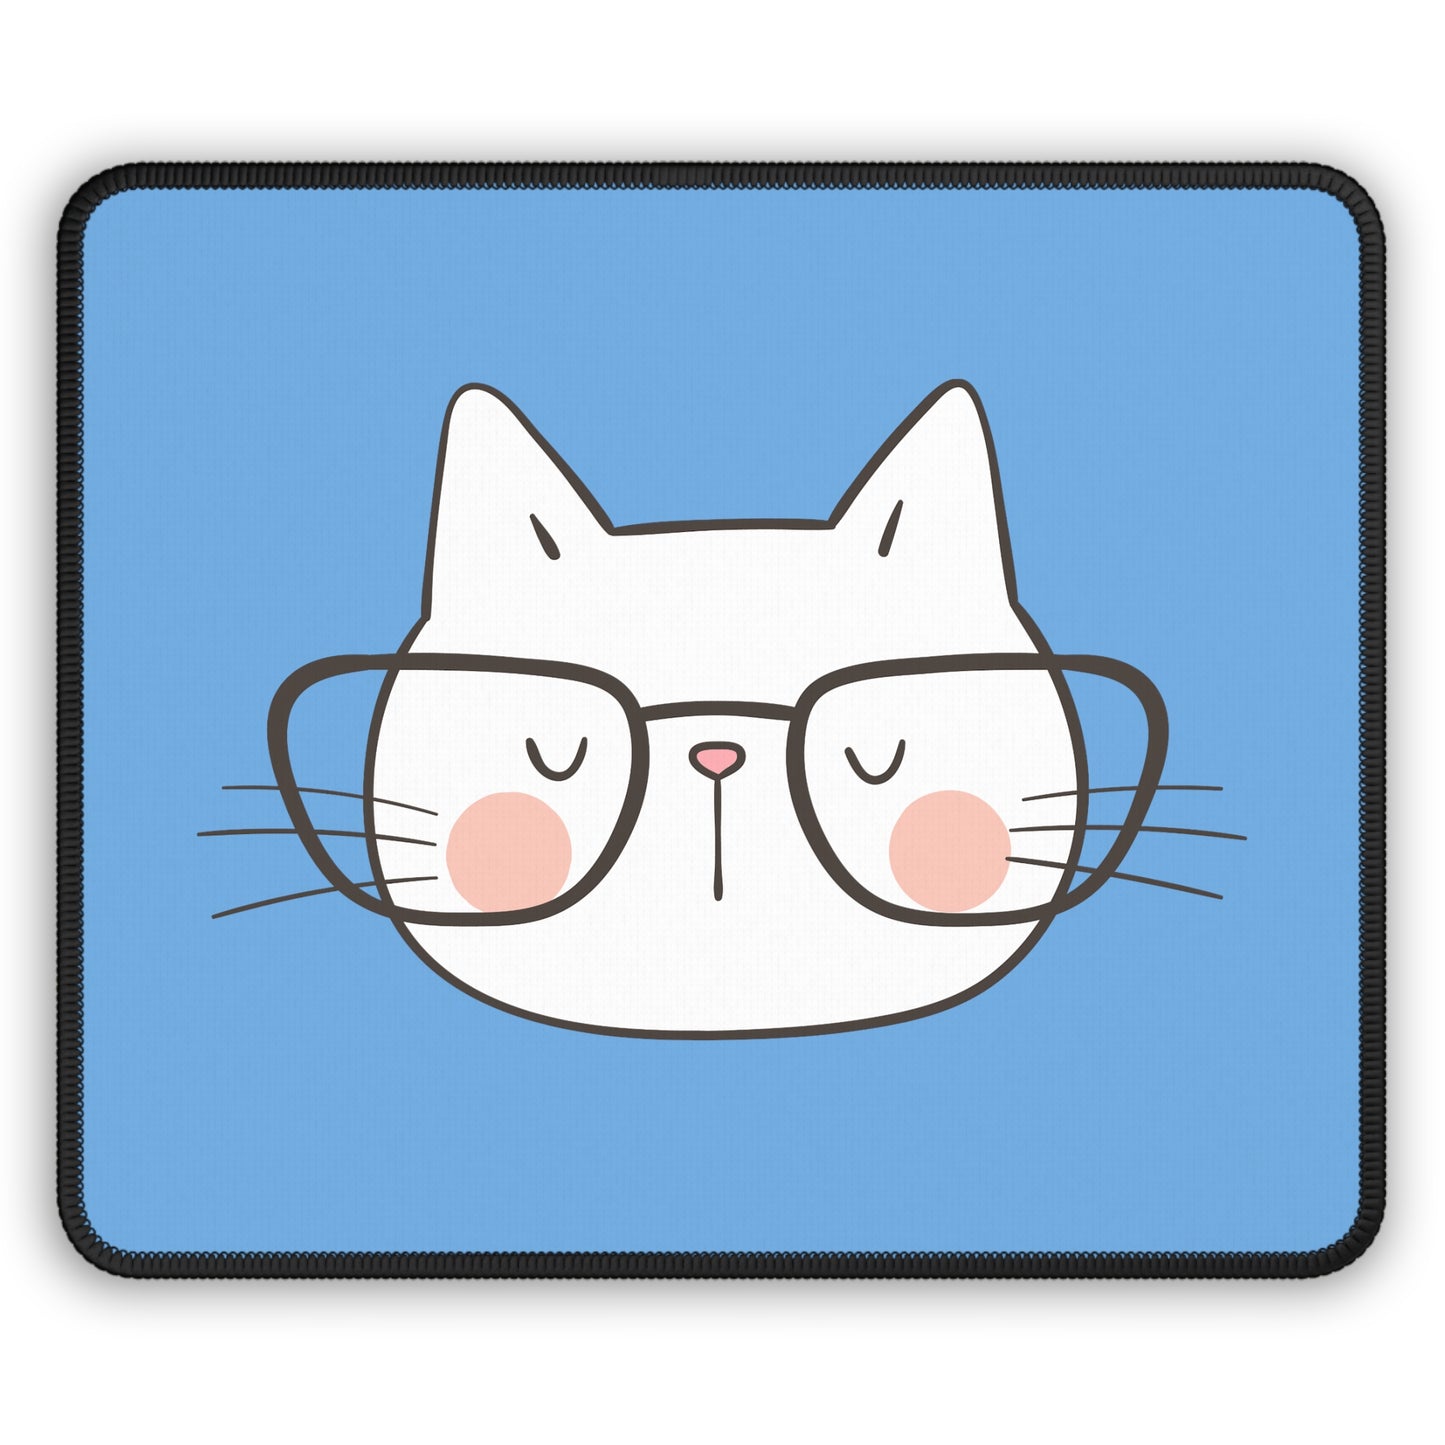 Nerdy Cat Mousepad (Blue)